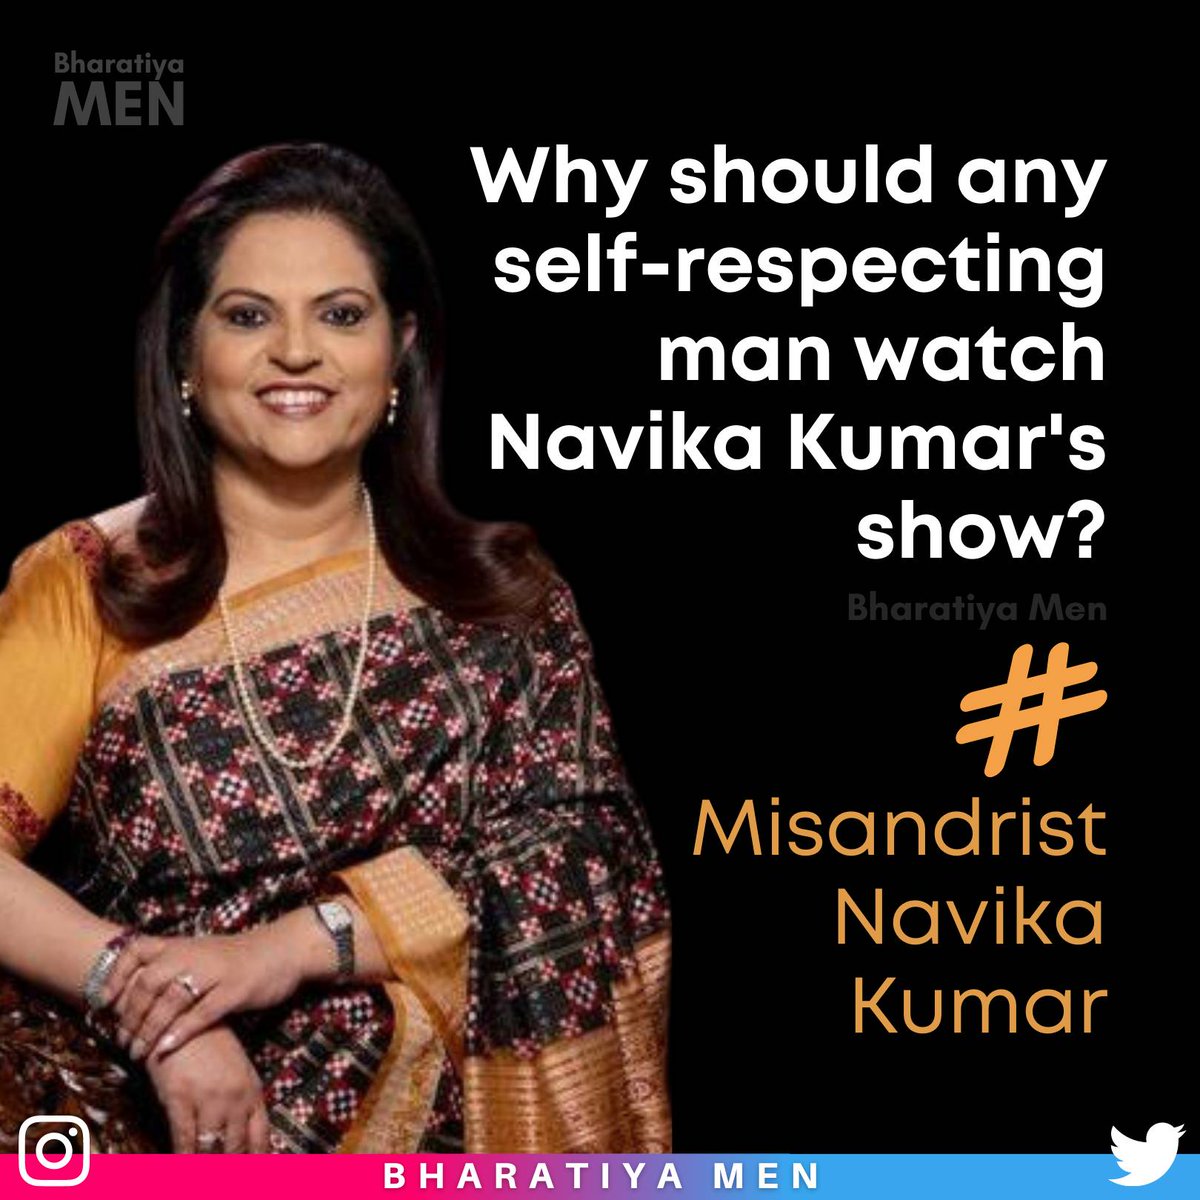 #MisandristNavikaKumar #Men #Misandry #MenRightsAreHumanRights @navikakumar @TimesNow @TNNavbharat #TimesNowNavbharat #AlokMaurya #JyotiMaurya